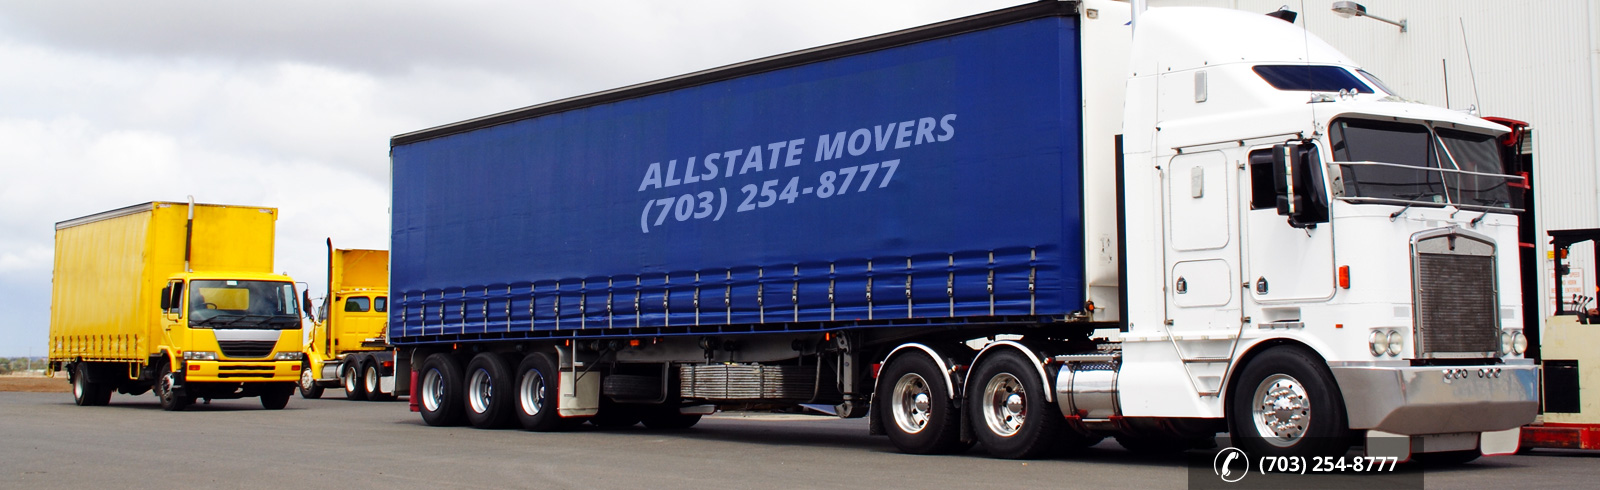 Moving Companies Northern VA